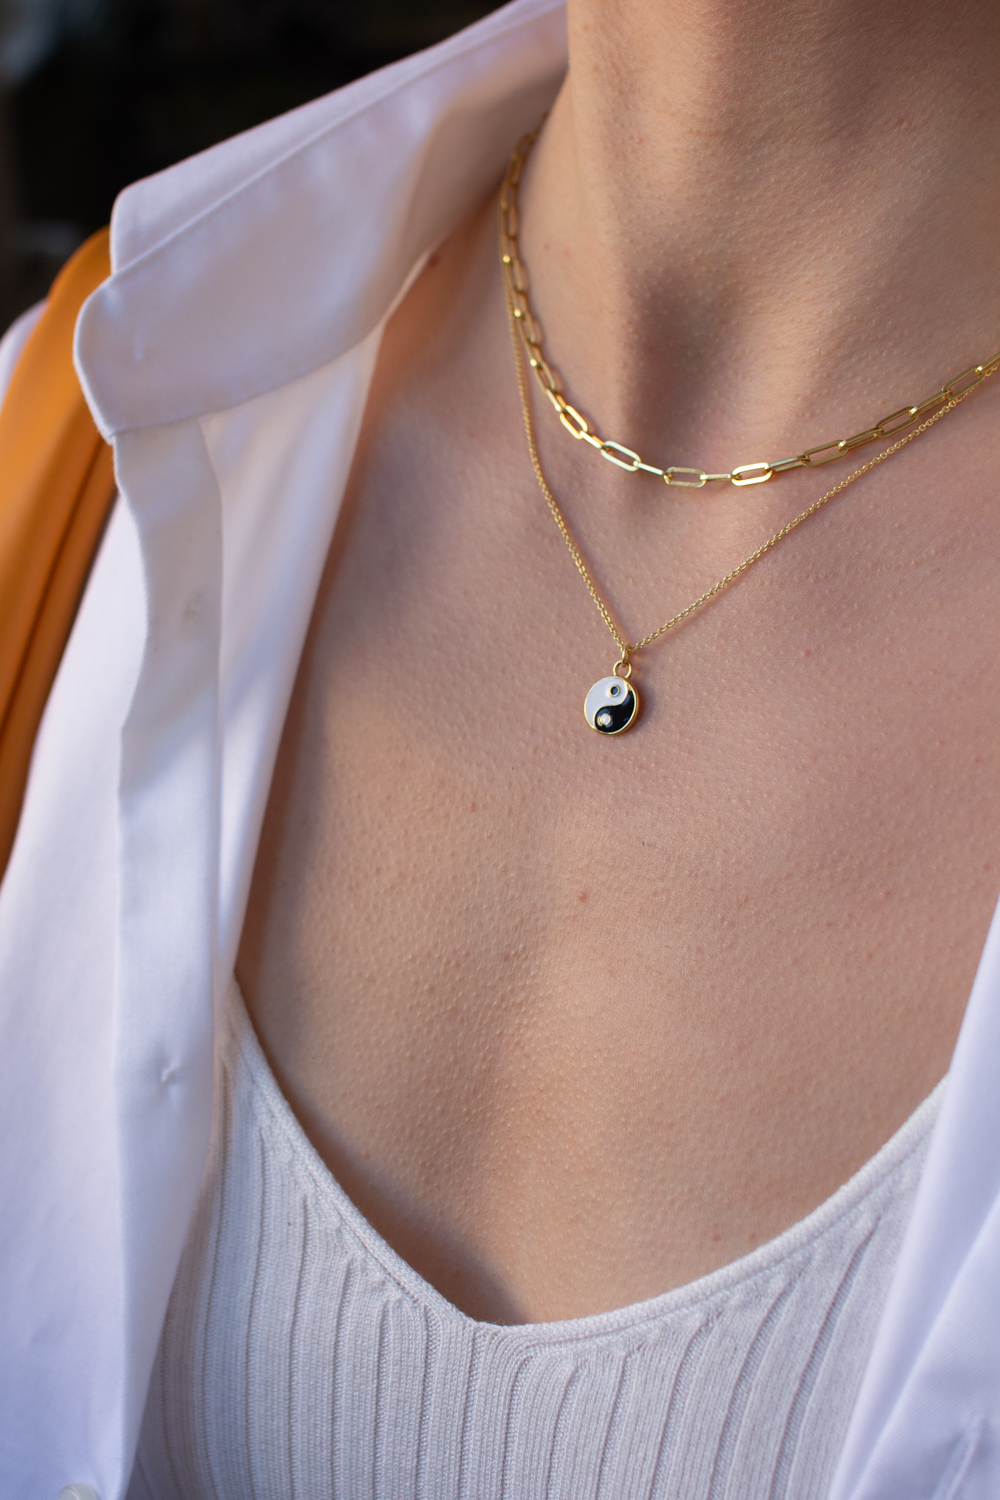 yy-necklace-1